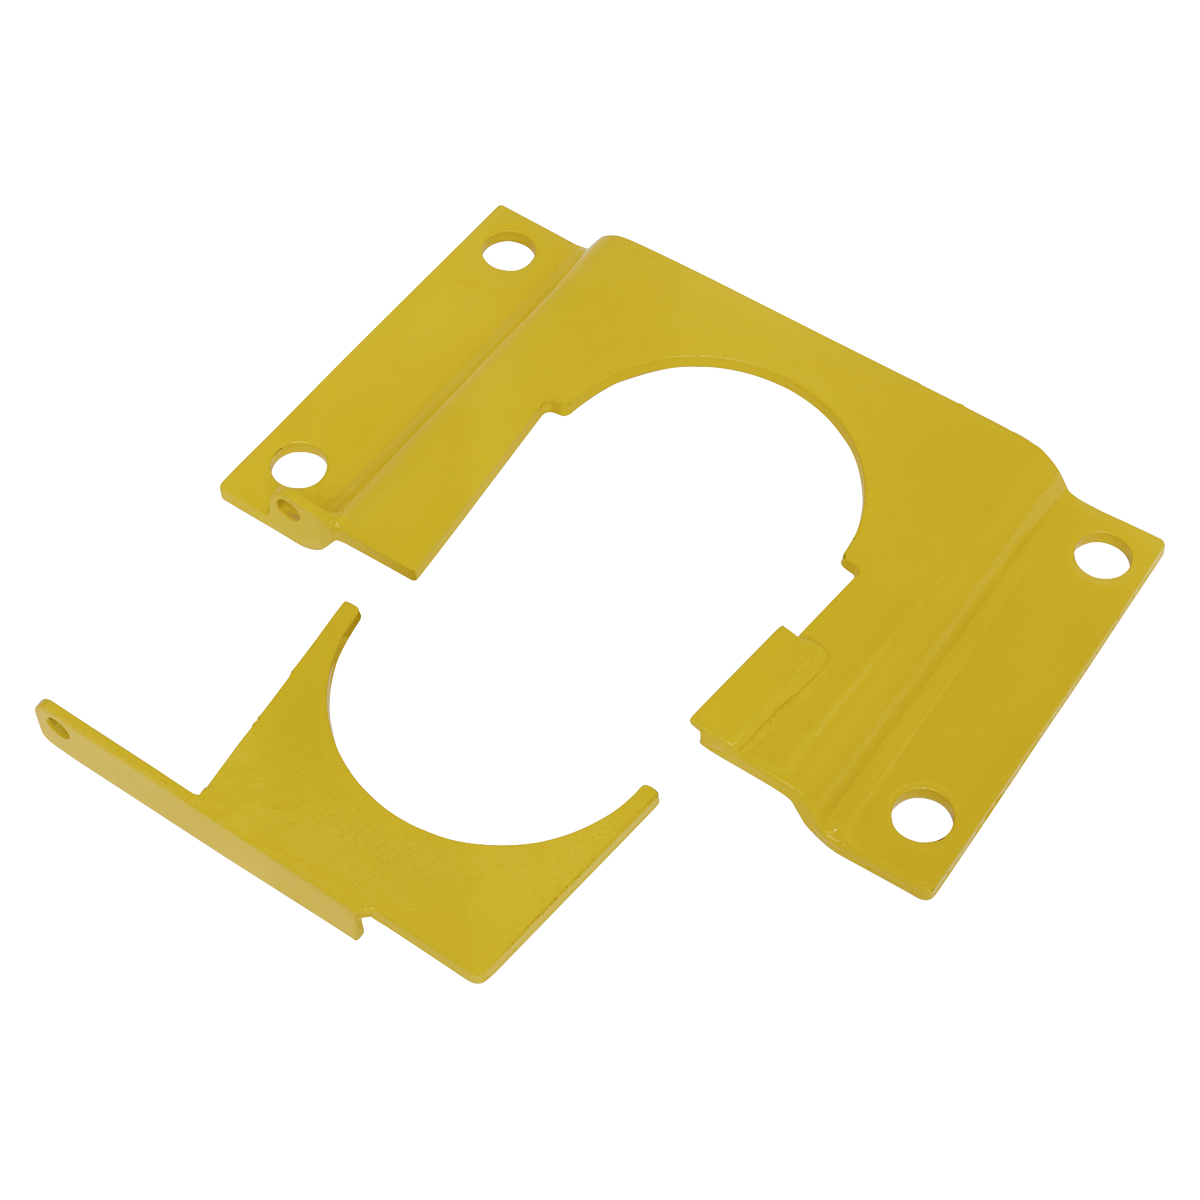 Removable Bollard Base Plate - Locking